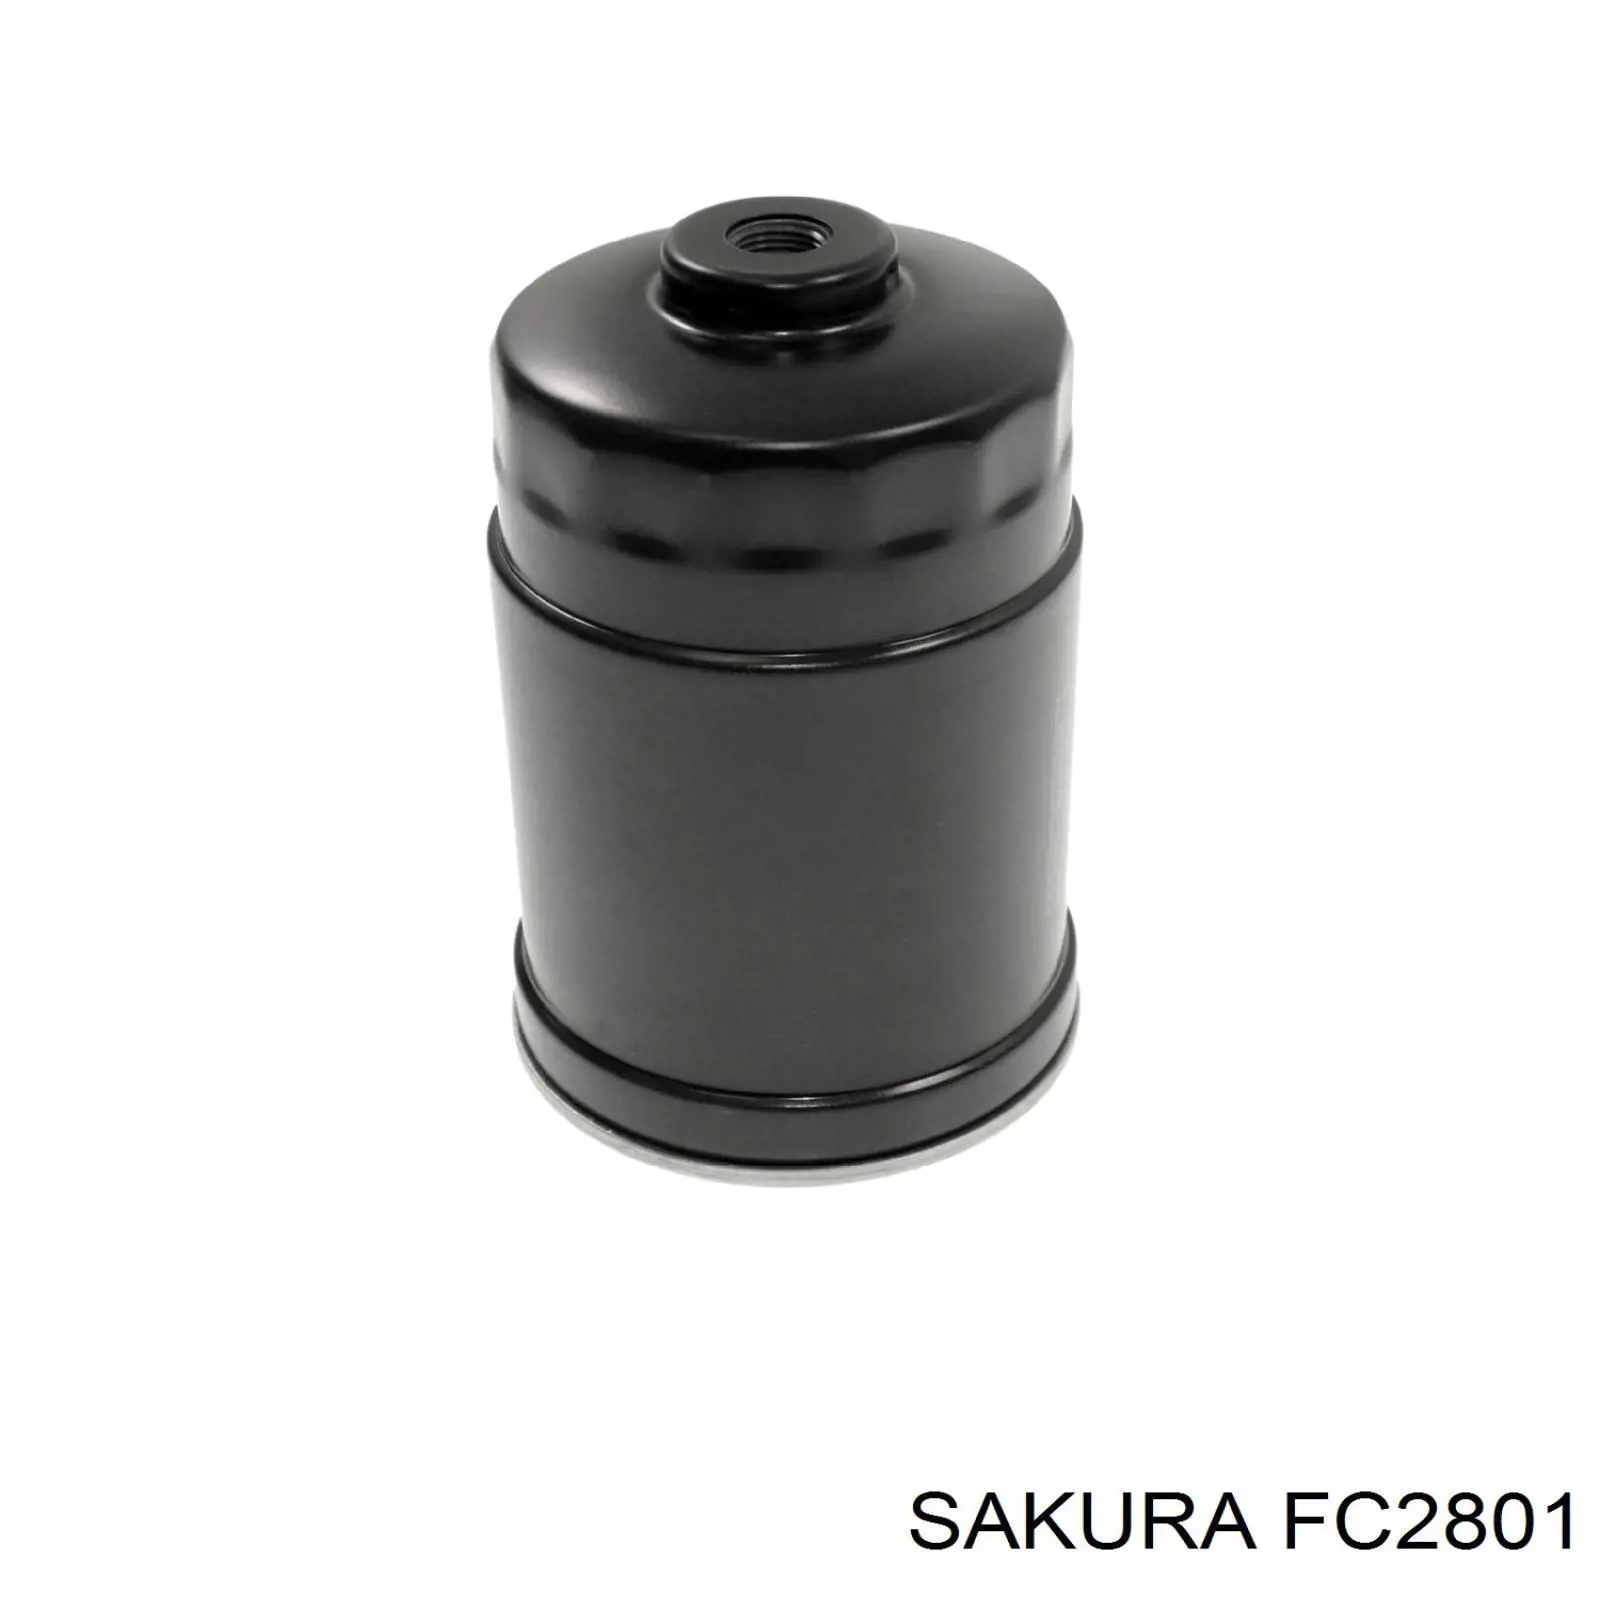 FC2801 Sakura filtro combustible